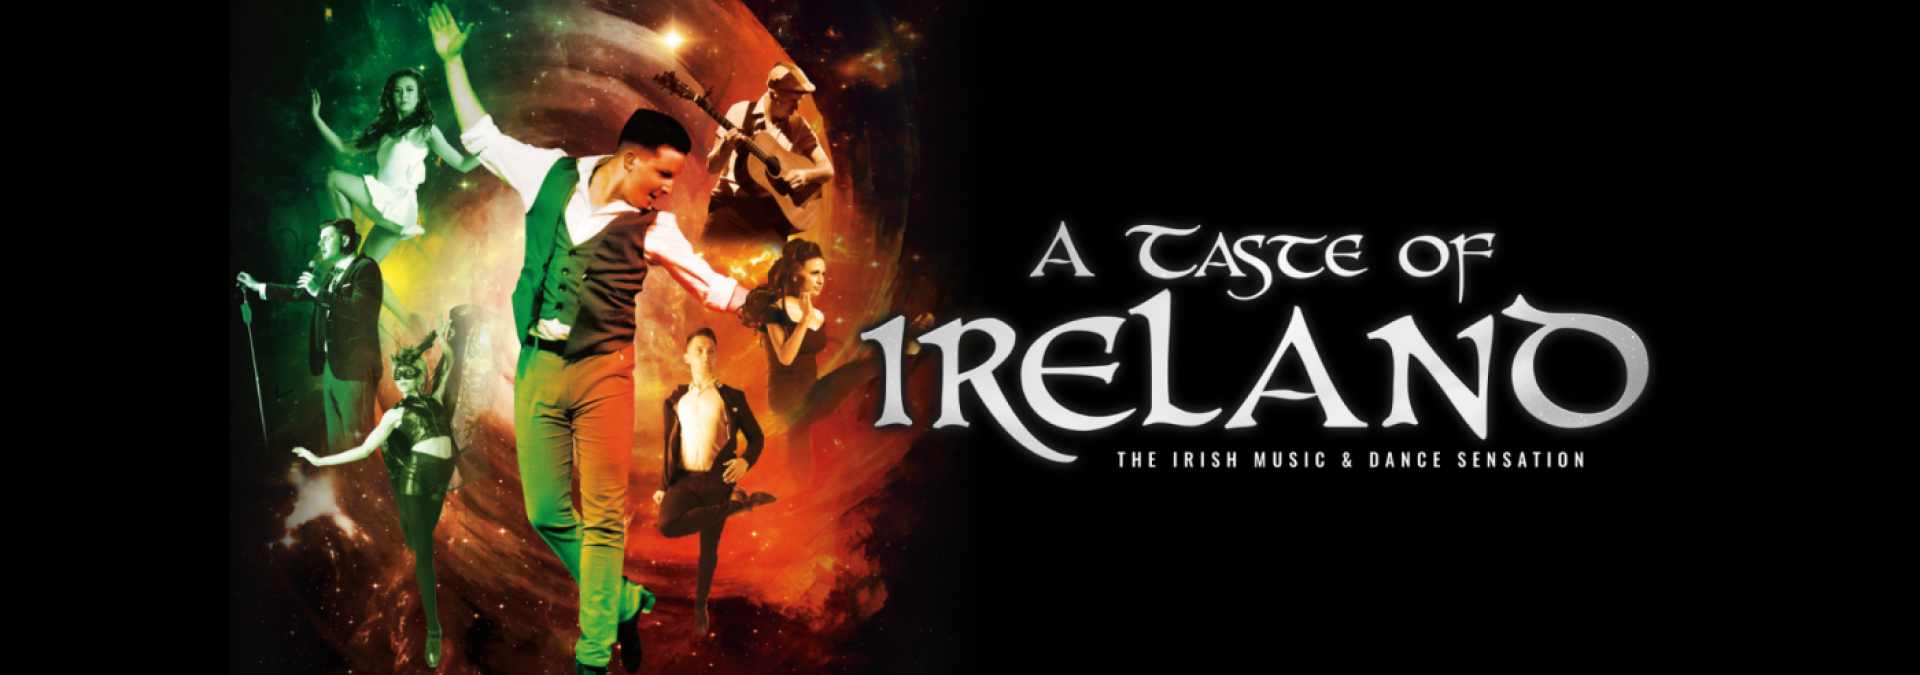 Taste of Ireland Website banner